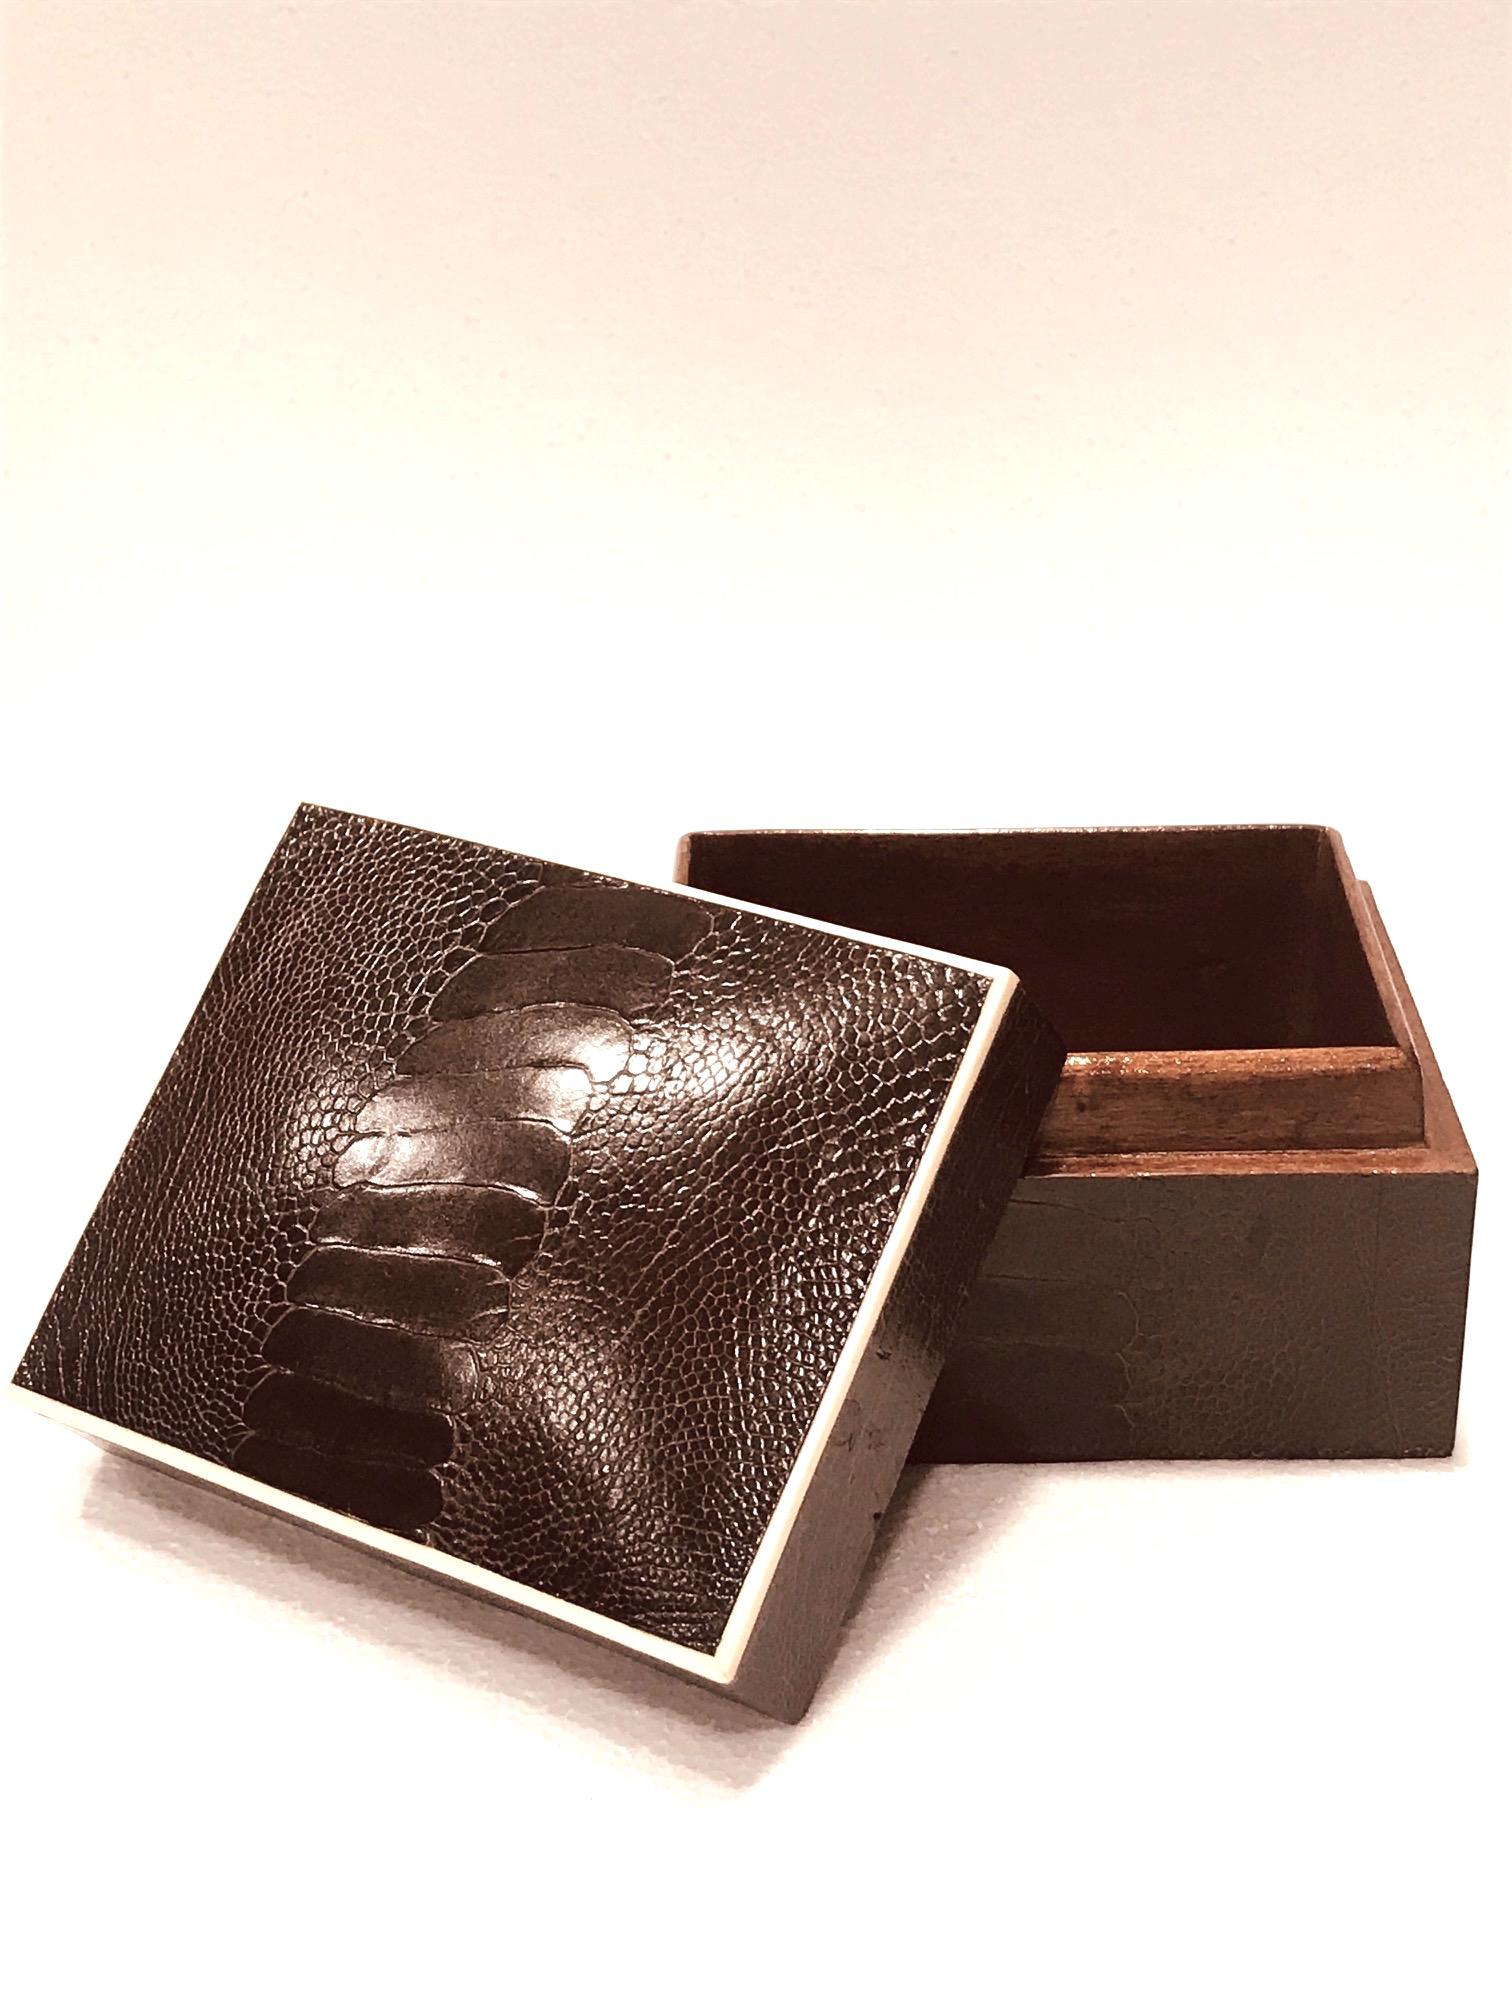 Palmwood Vintage R&Y Augousti Decorative Box in Brown Ostrich Leather and Bone, c. 2000